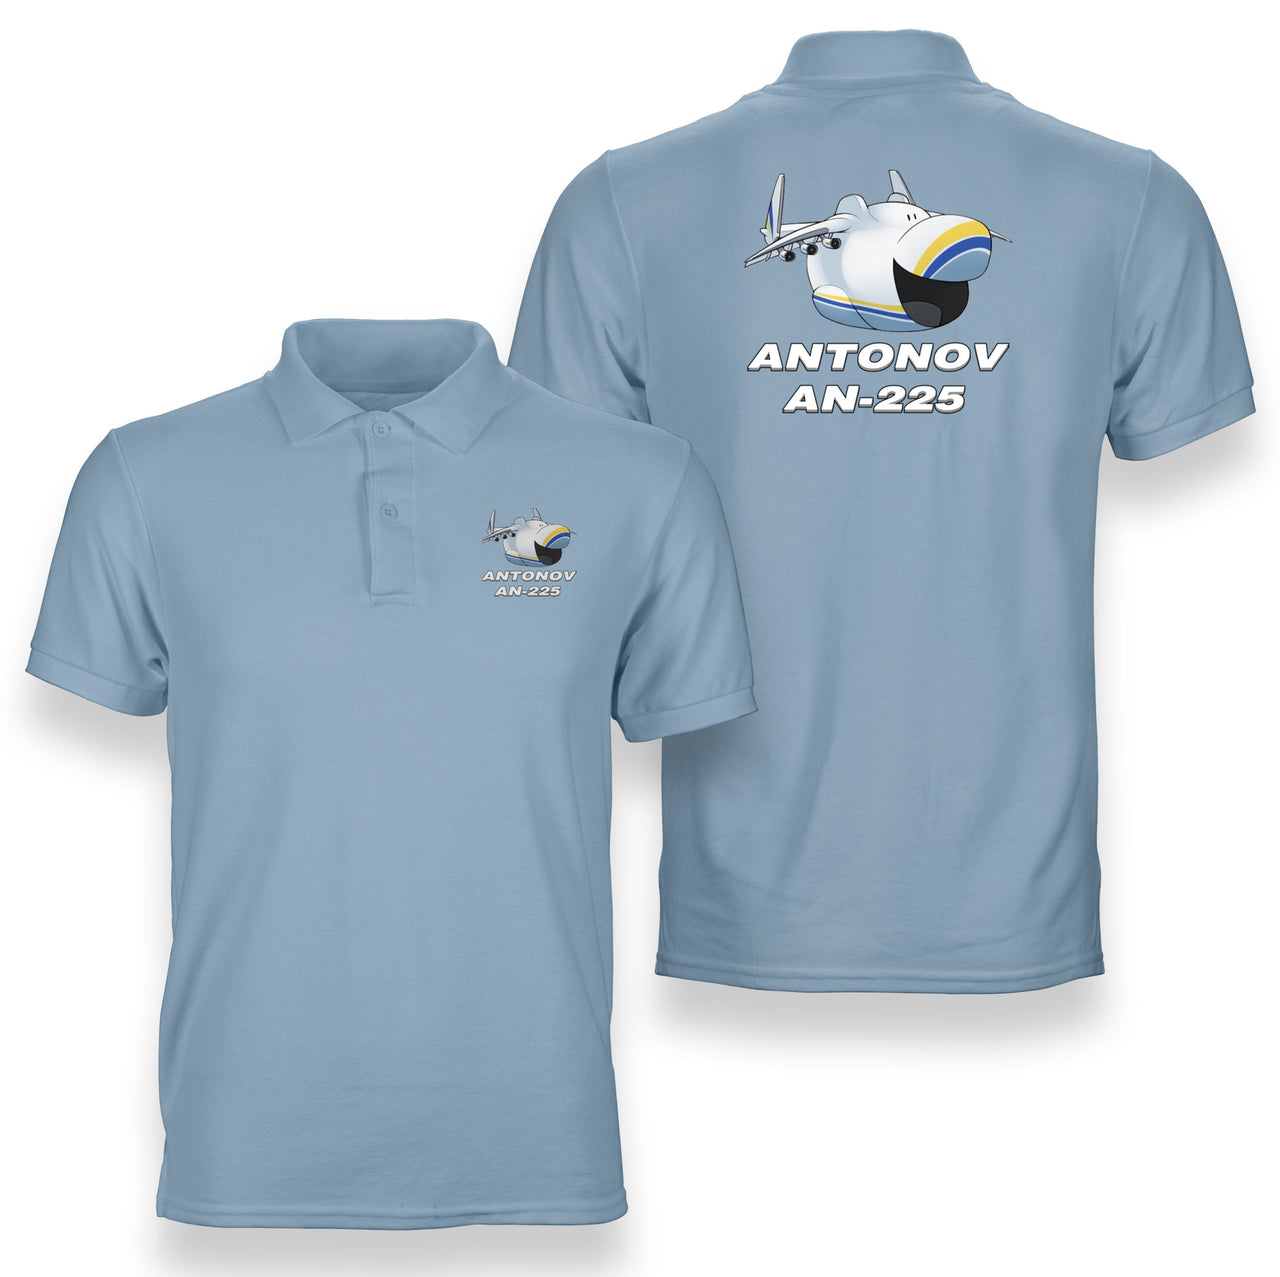 Antonov AN-225 (23) Designed Double Side Polo T-Shirts